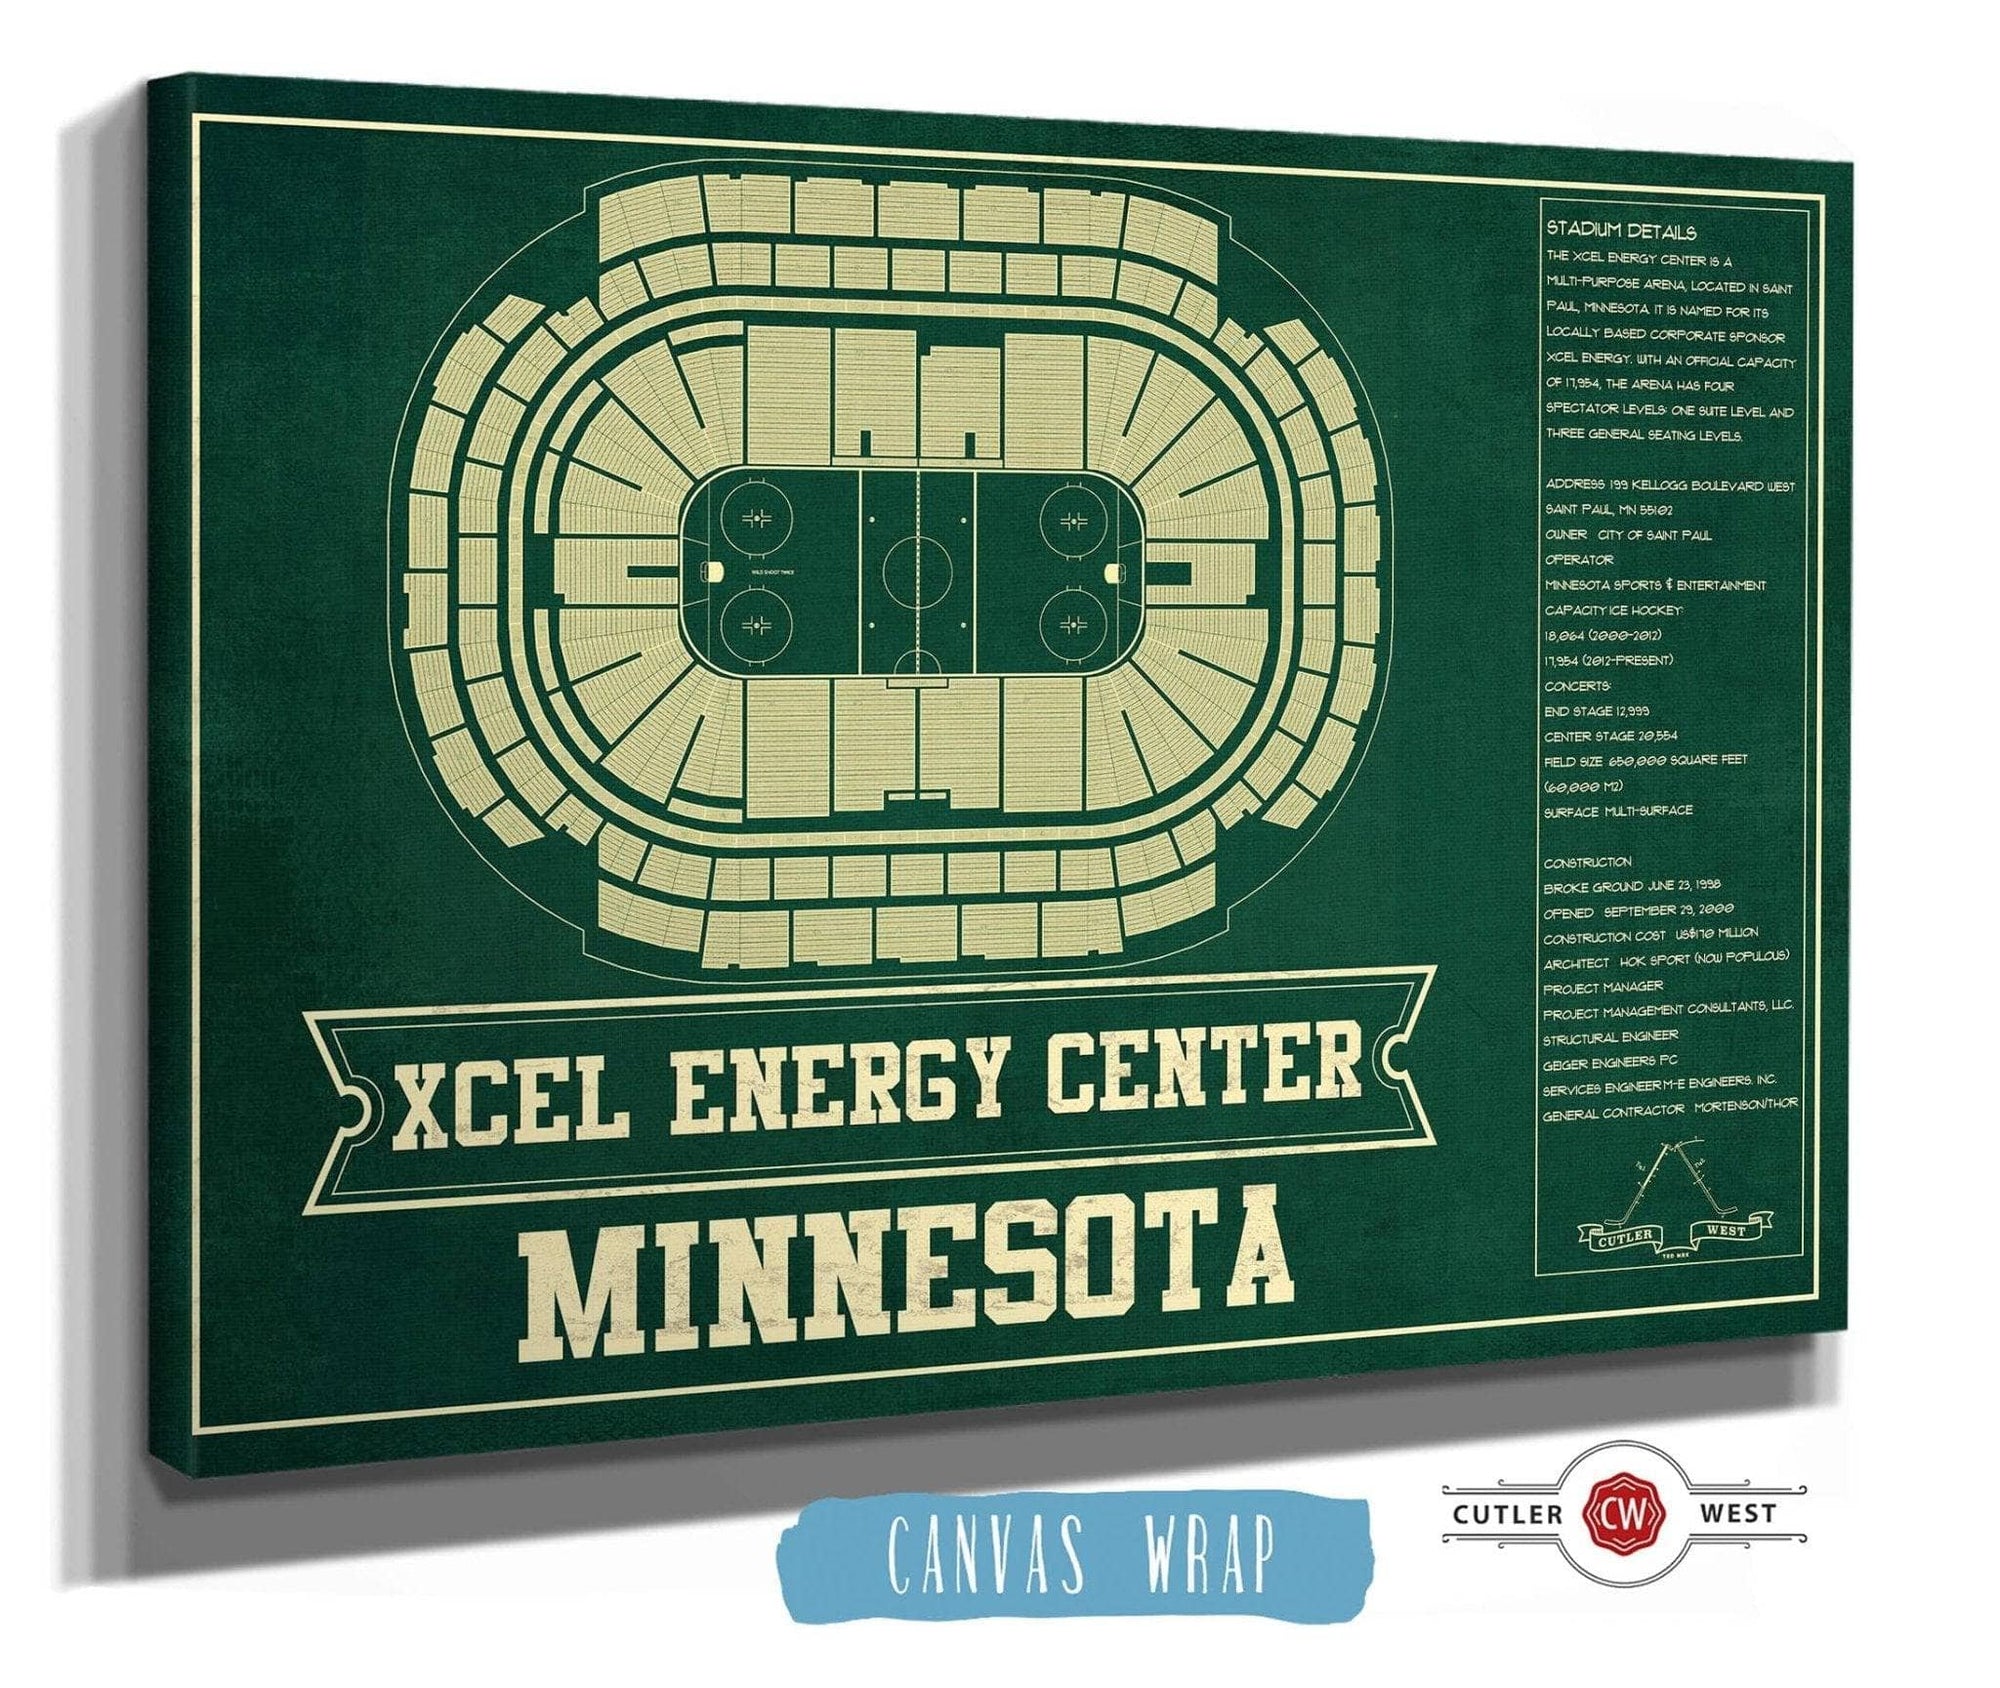 Cutler West 14" x 11" / Stretched Canvas Wrap Minnesota Wild Team Colors - Xcel Energy Center Vintage Hockey Blueprint NHL Print 659981782-TEAM